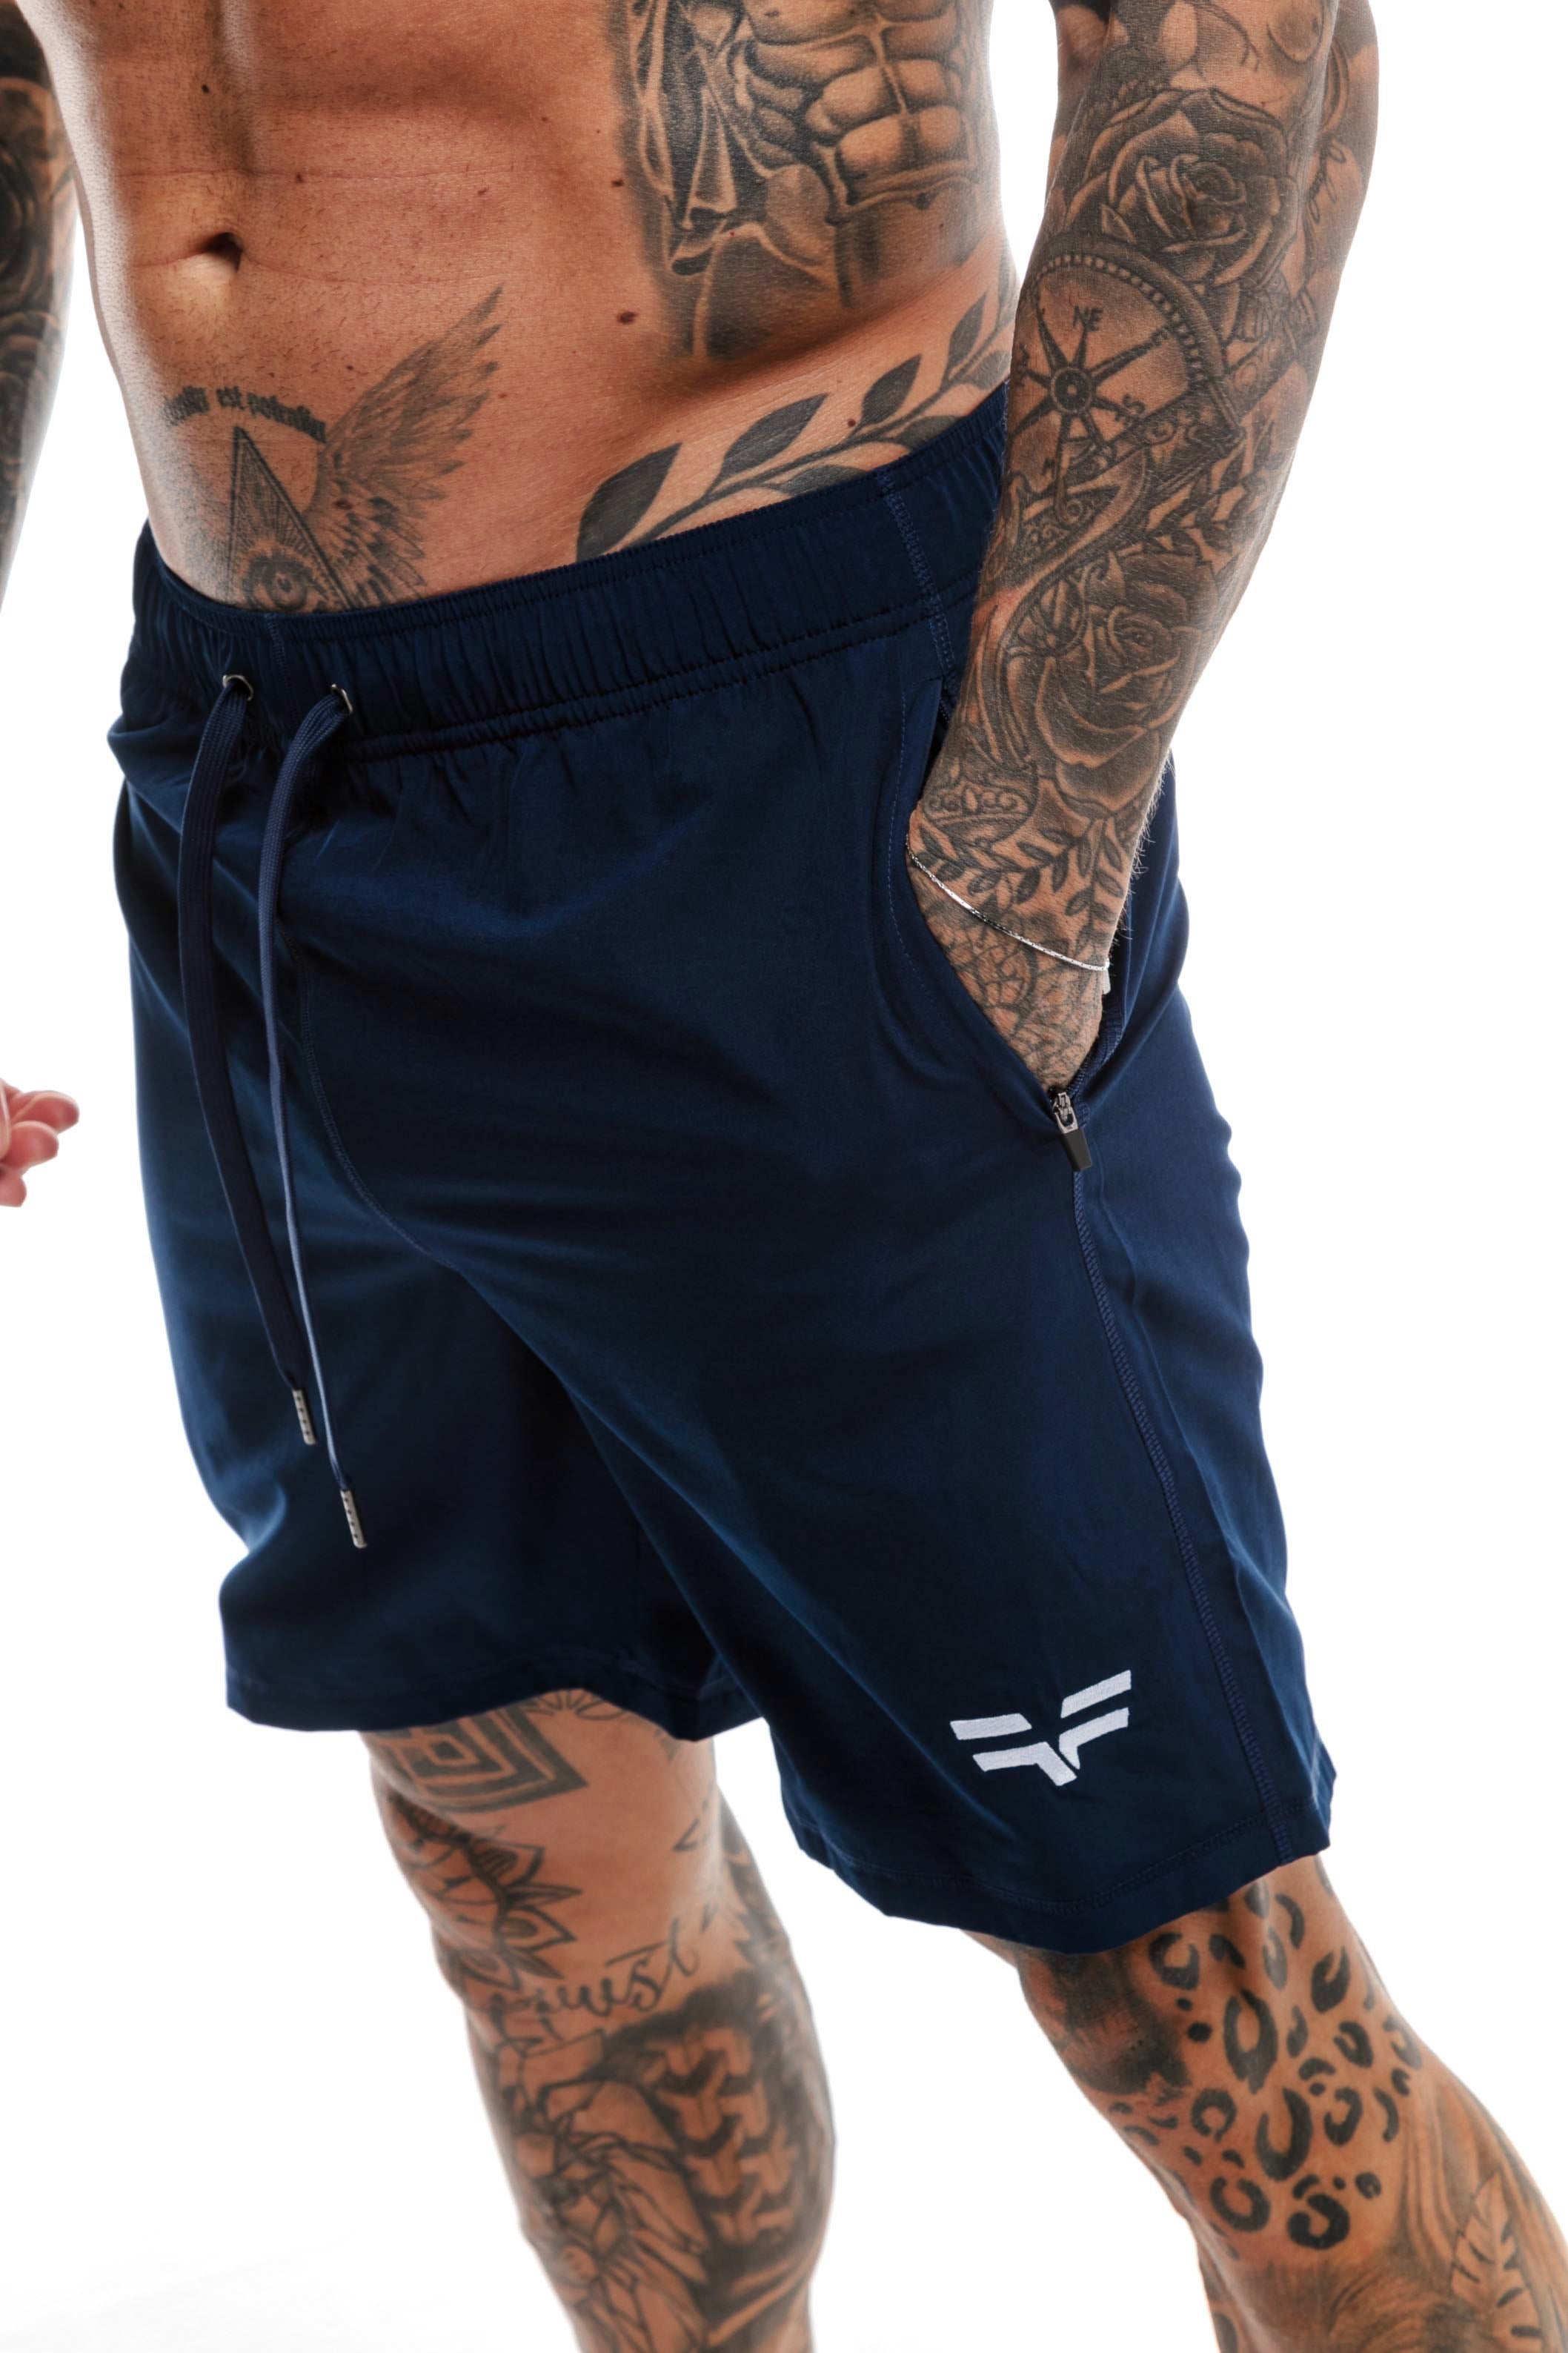 GymFreak Mens 365 Shorts - Navy Blue - 7 inch